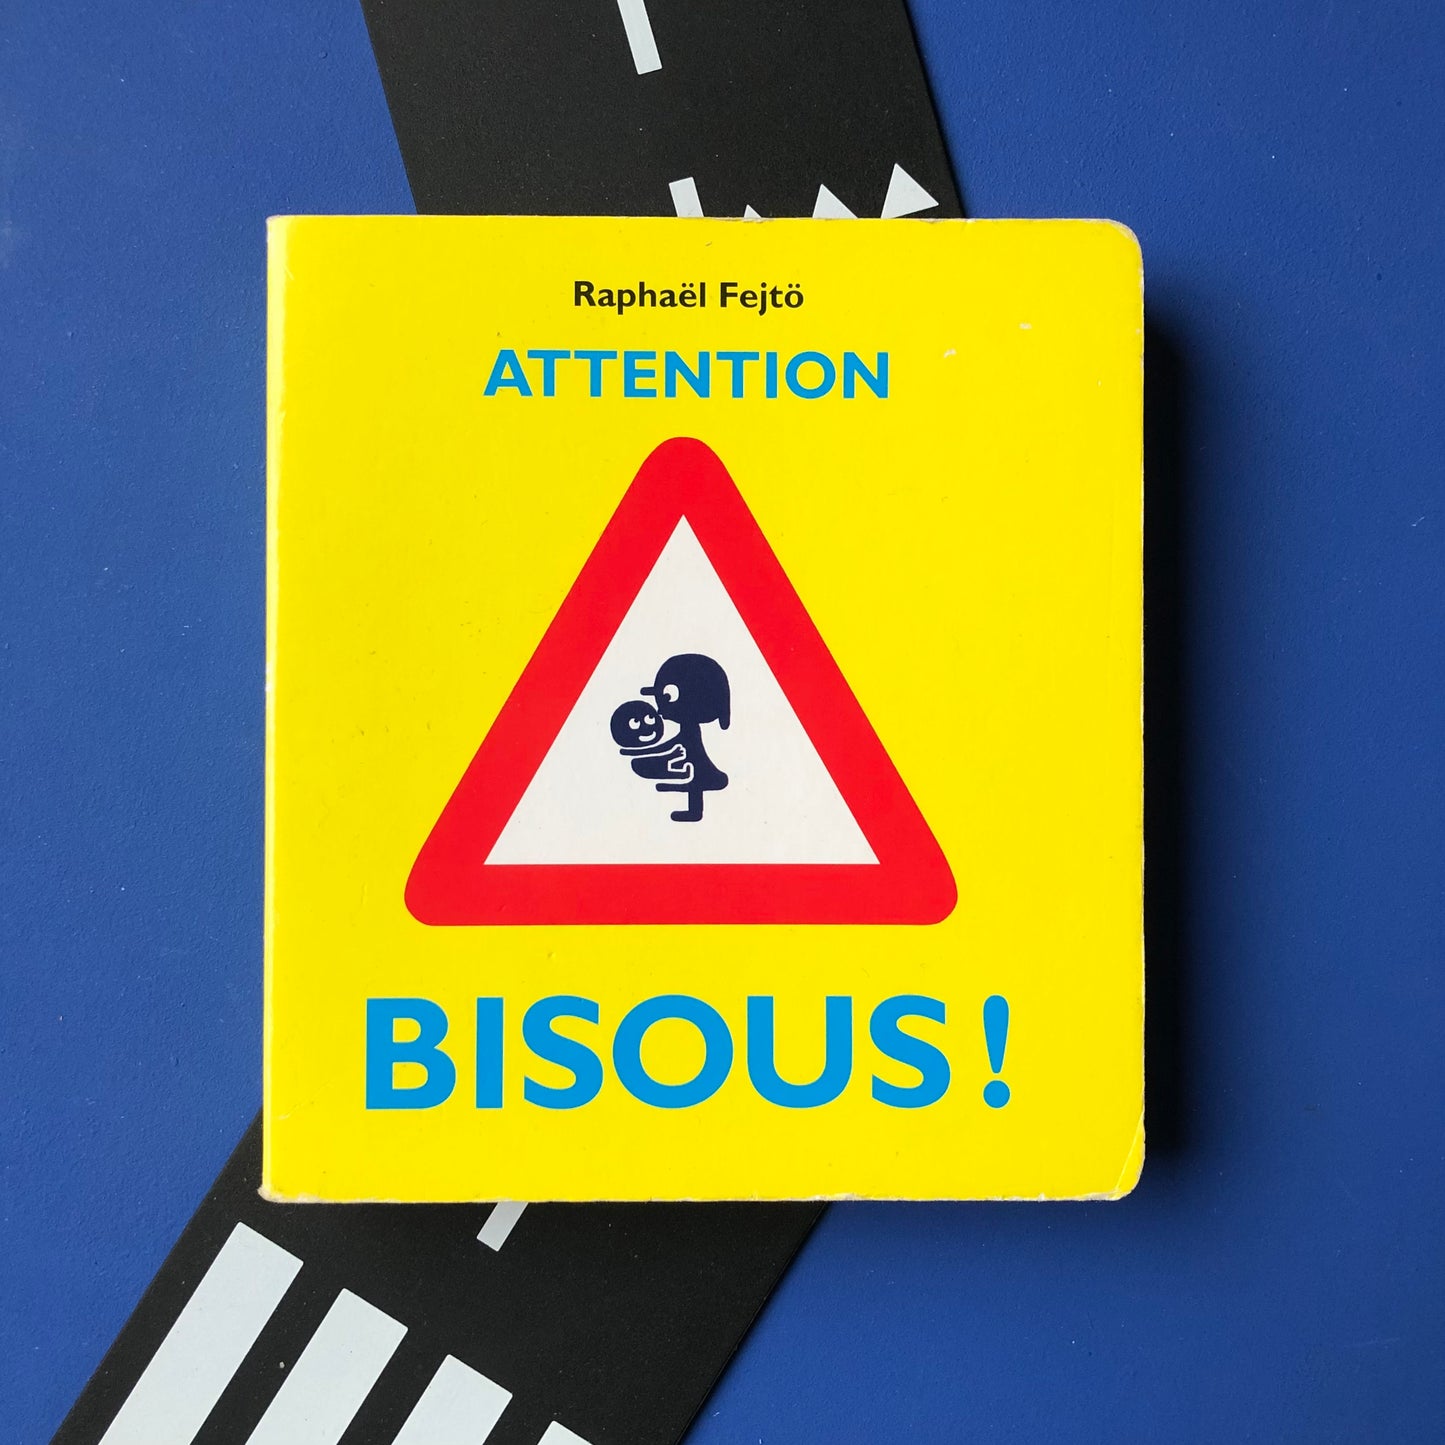 Attention bisous ! - Raphaël Fejtö